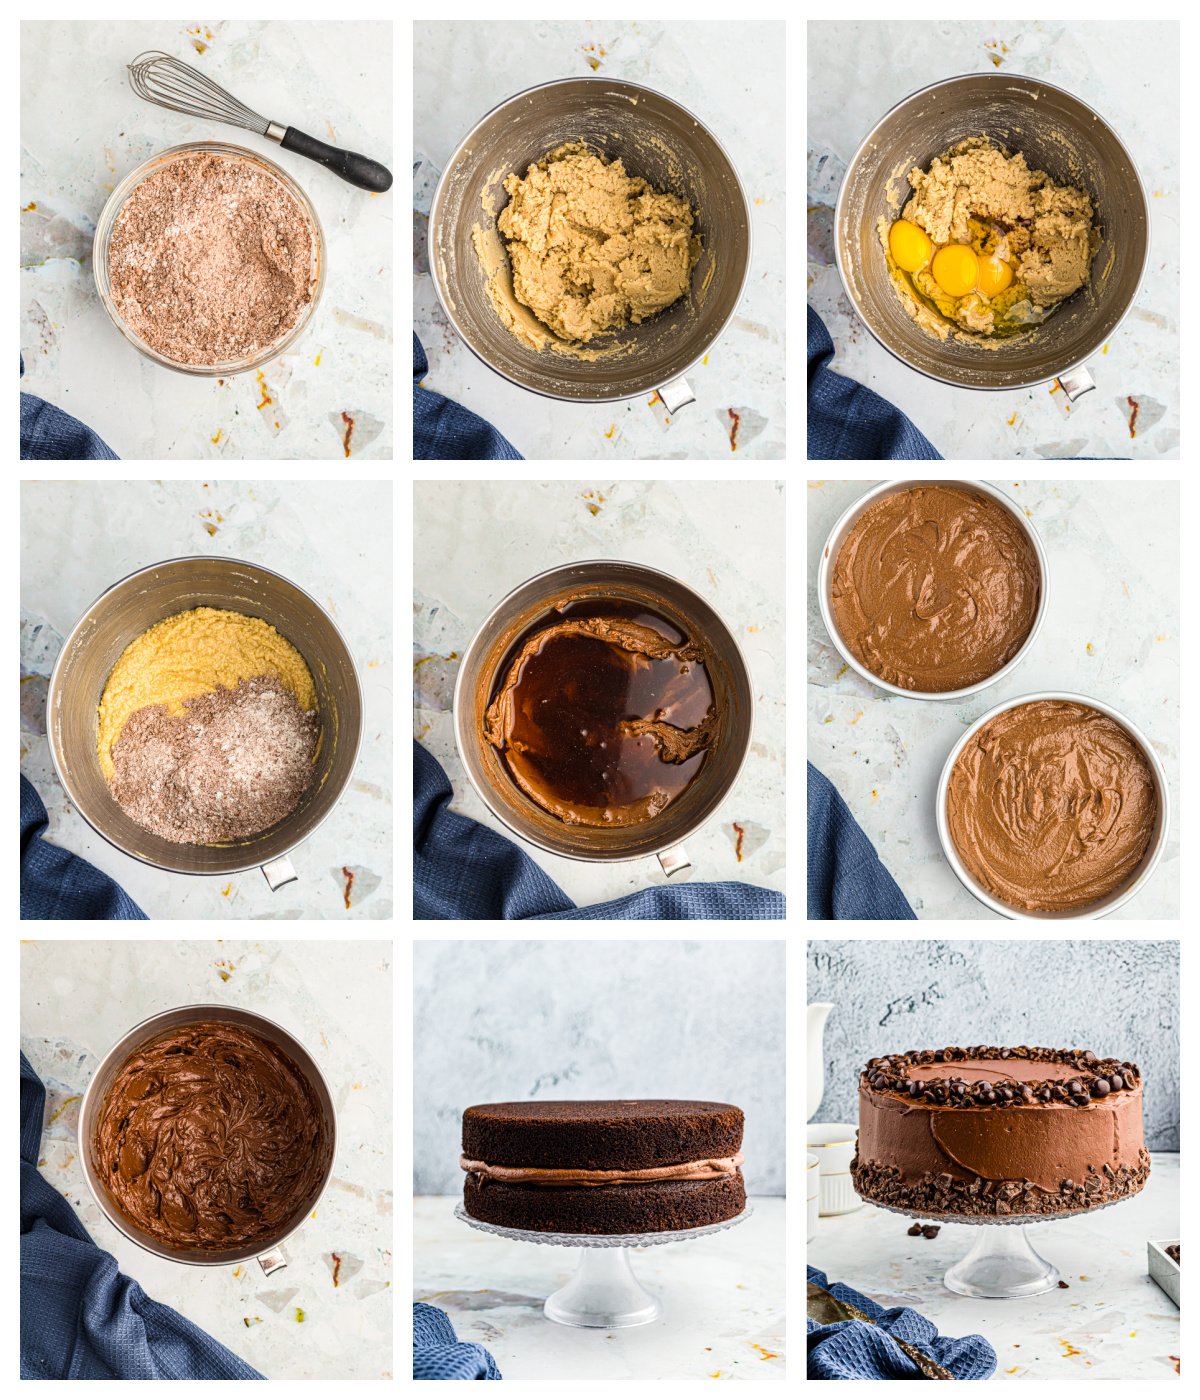 Step by step photos on how to make Chocolate Espresso Cake.